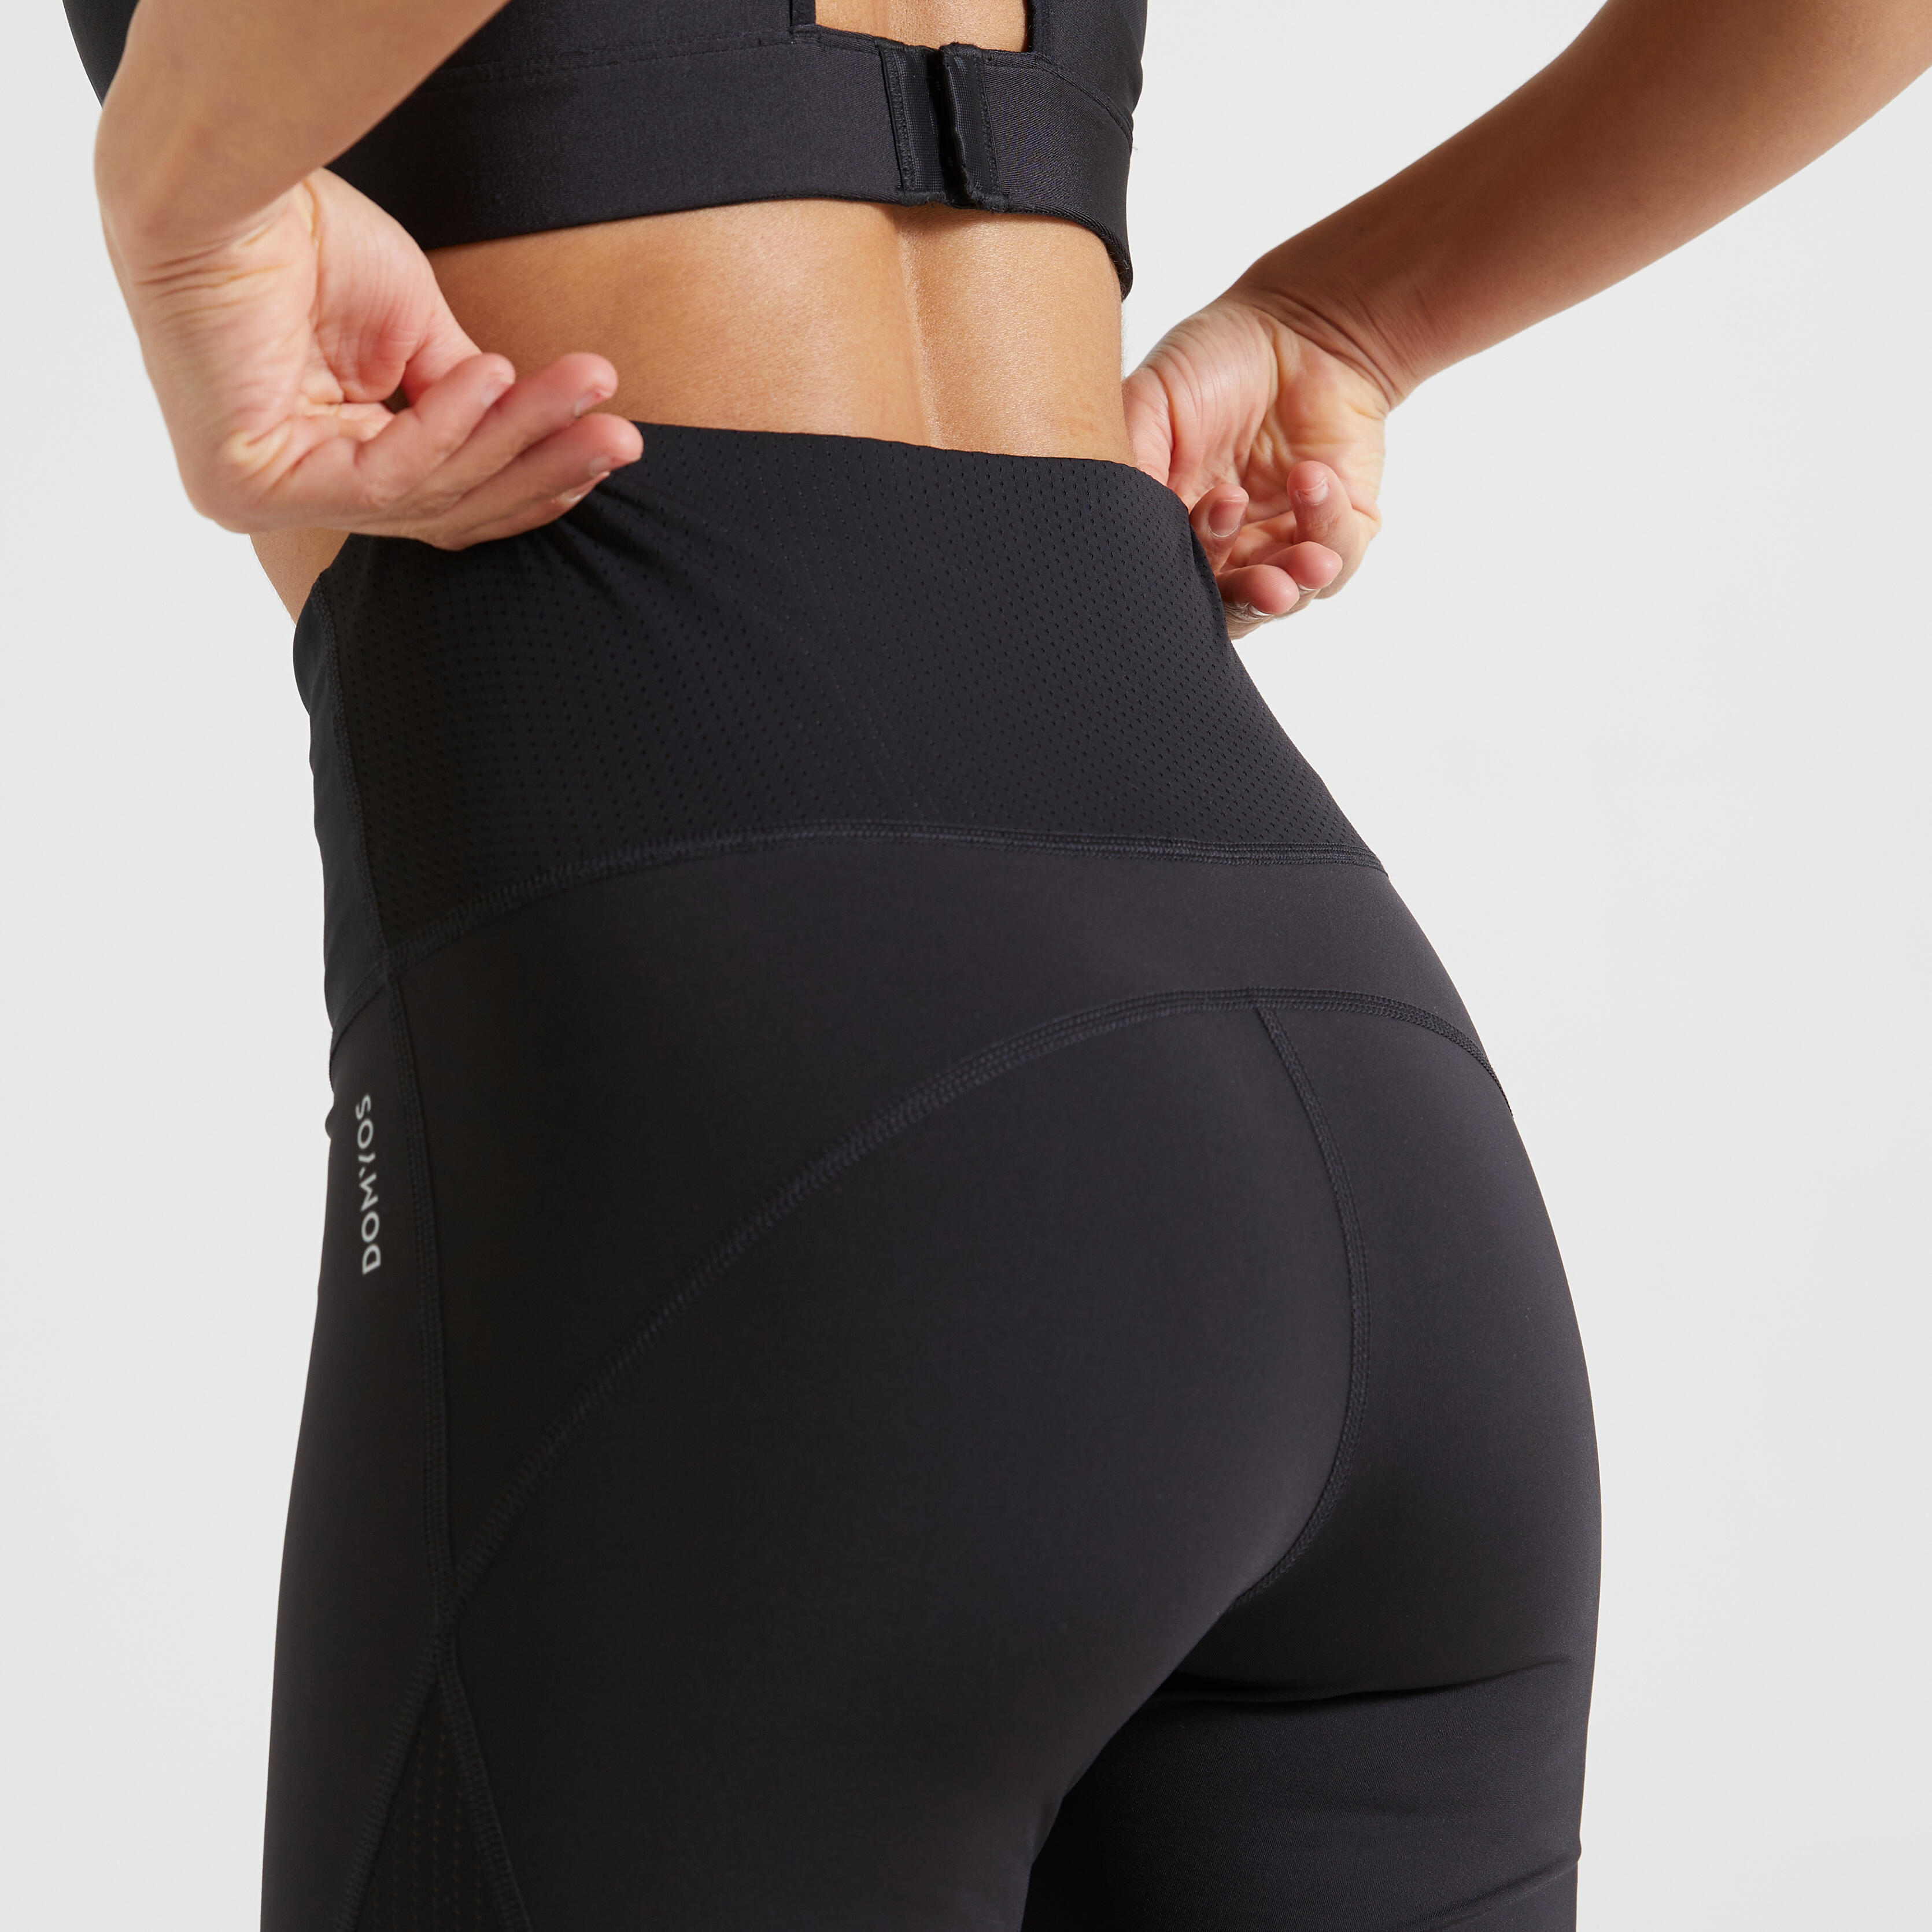 Decathlon Women's Fitness Cardio Training Quick Dry Pants FPA100 W (Black)  - Domyos